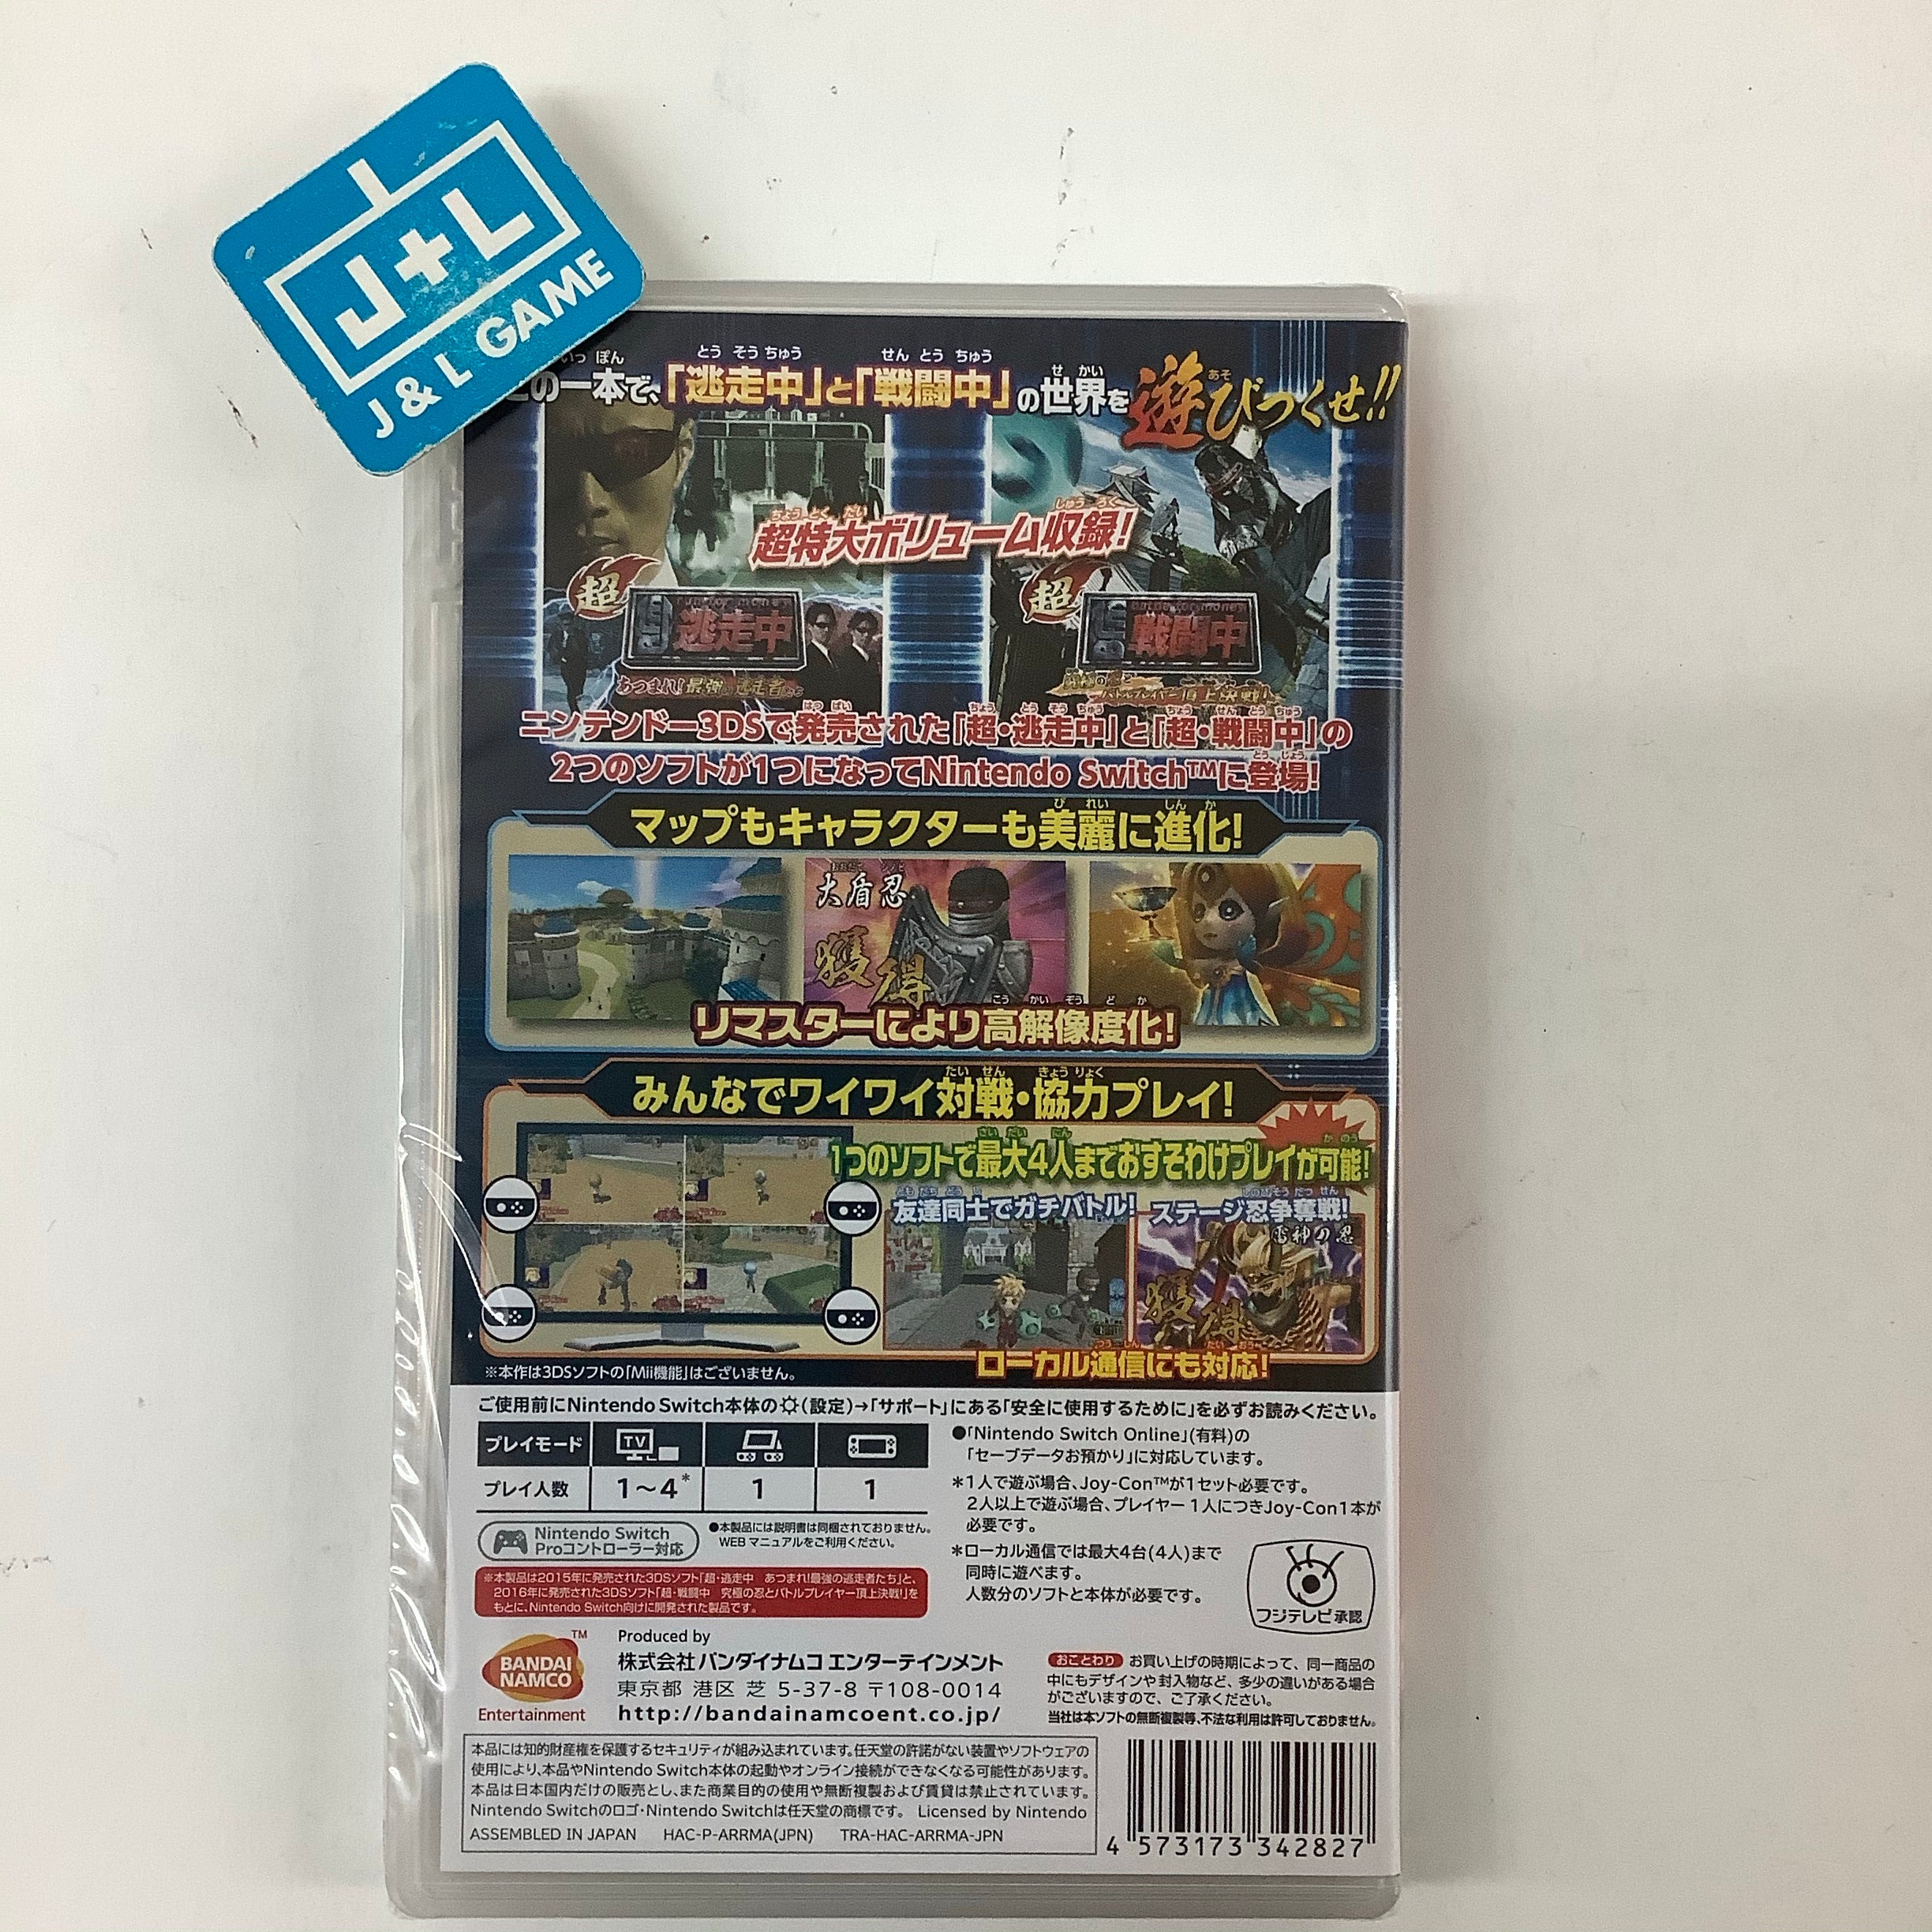 Chou Tousouchuu & Chou Sentouchuu Double Pack - (NSW) Nintendo Switch (Japanese Import) Video Games Bandai Namco Games   